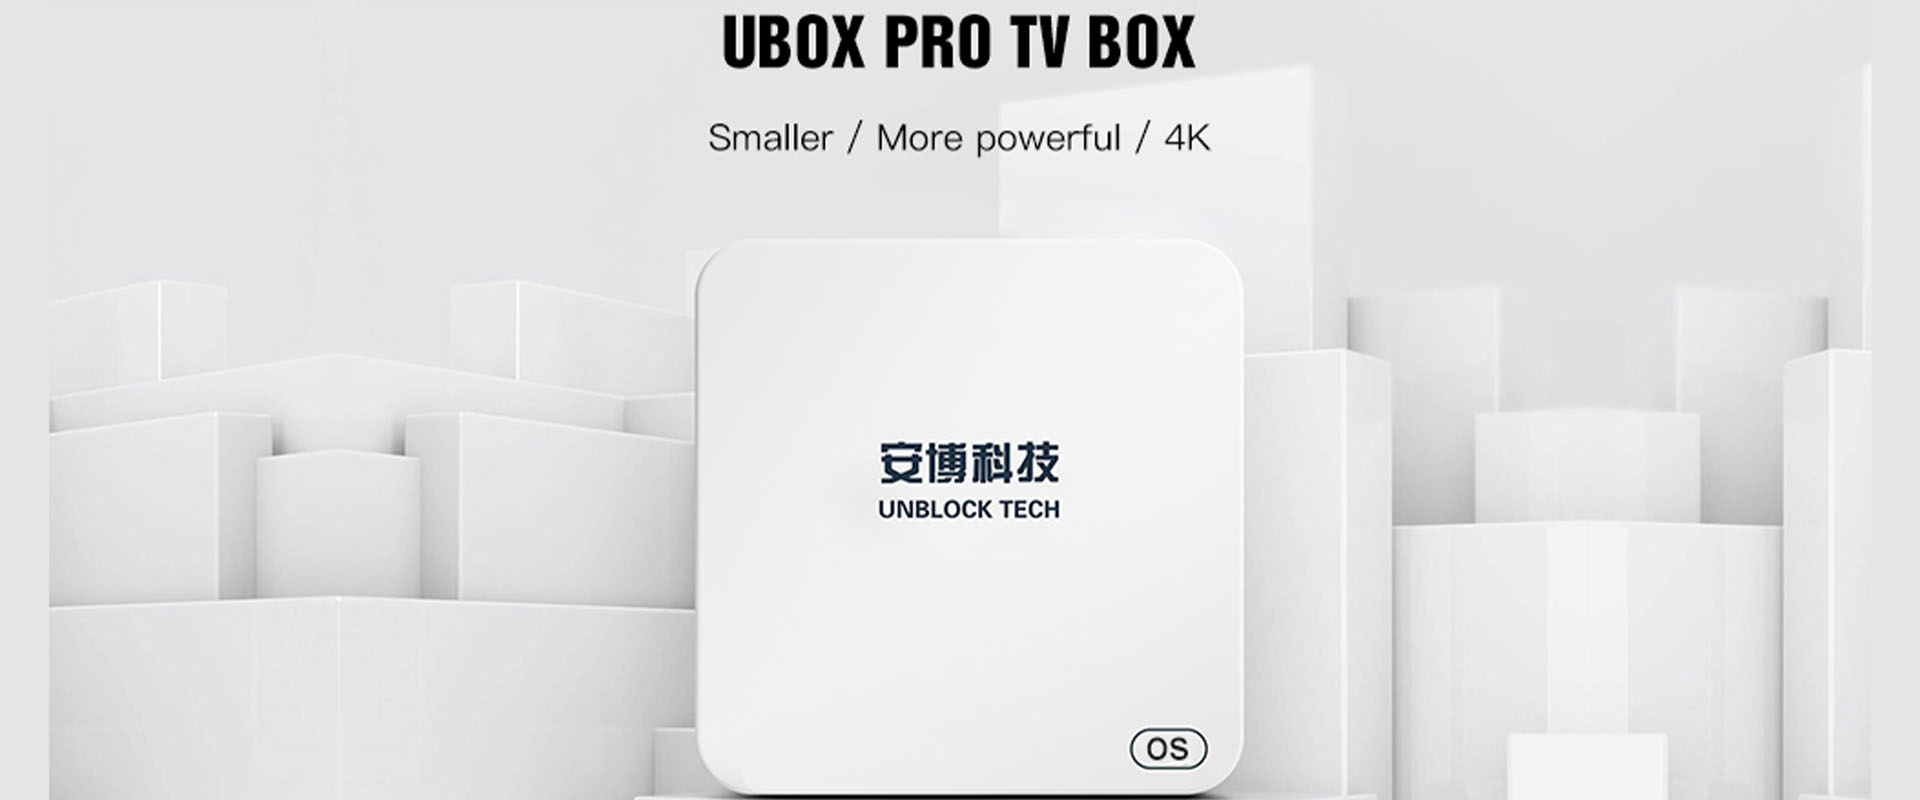 Ubox5 Pro TV Box - Unblock Tech أحدث إصدار من UBOX Gen 5 Pro Max